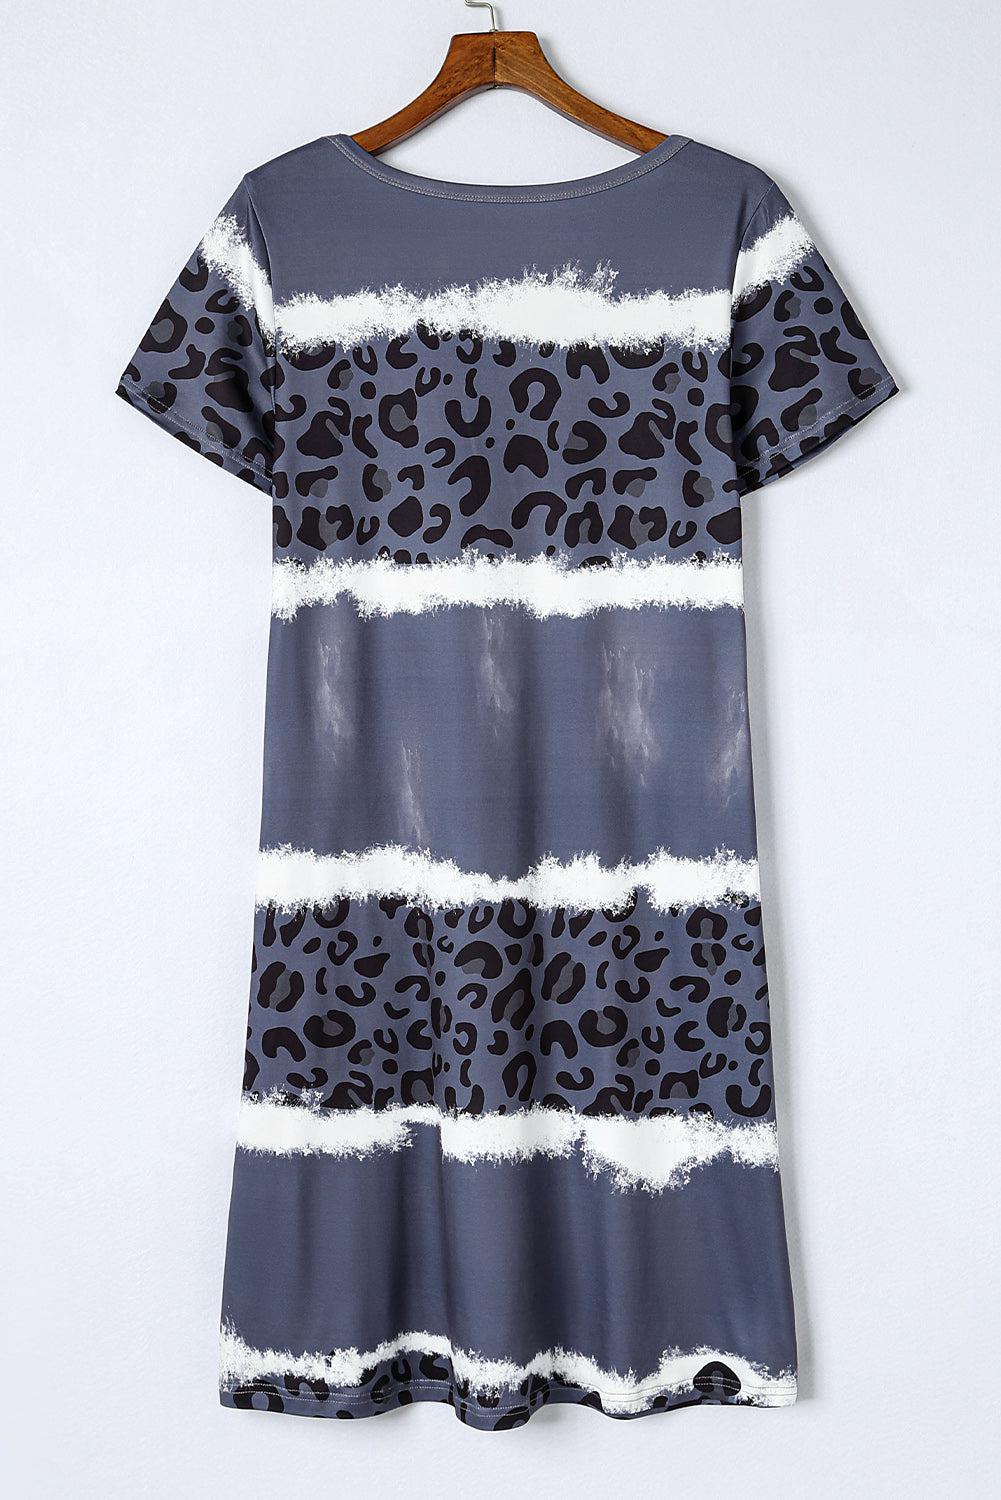 Leopard Color Block V-Neck Short Sleeve Dress BLUE ZONE PLANET